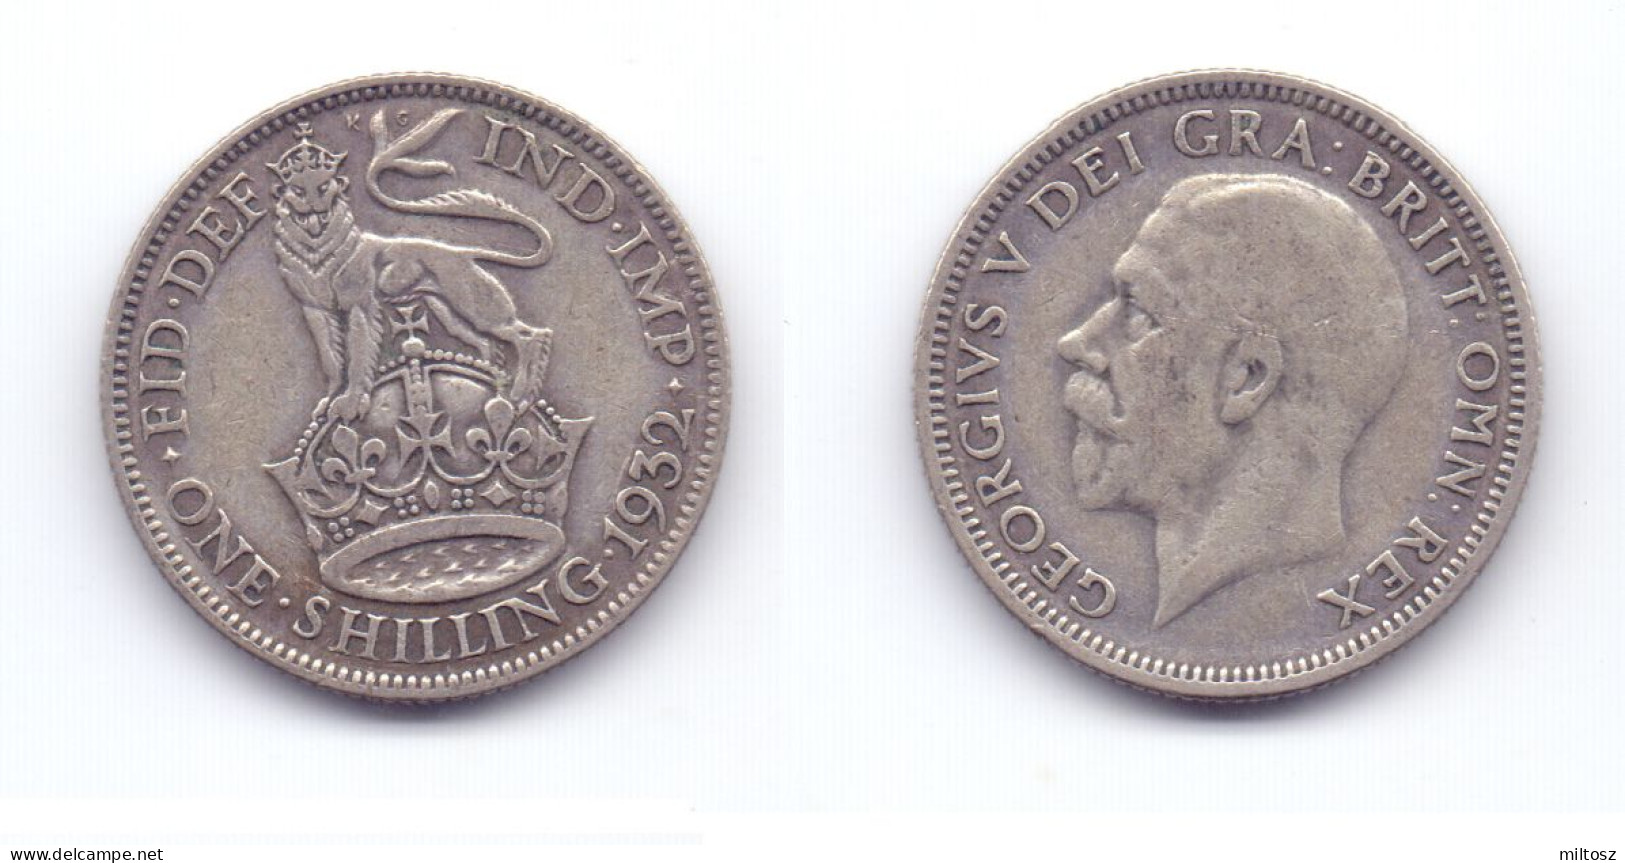 Great Britain 1 Shilling 1932 - I. 1 Shilling